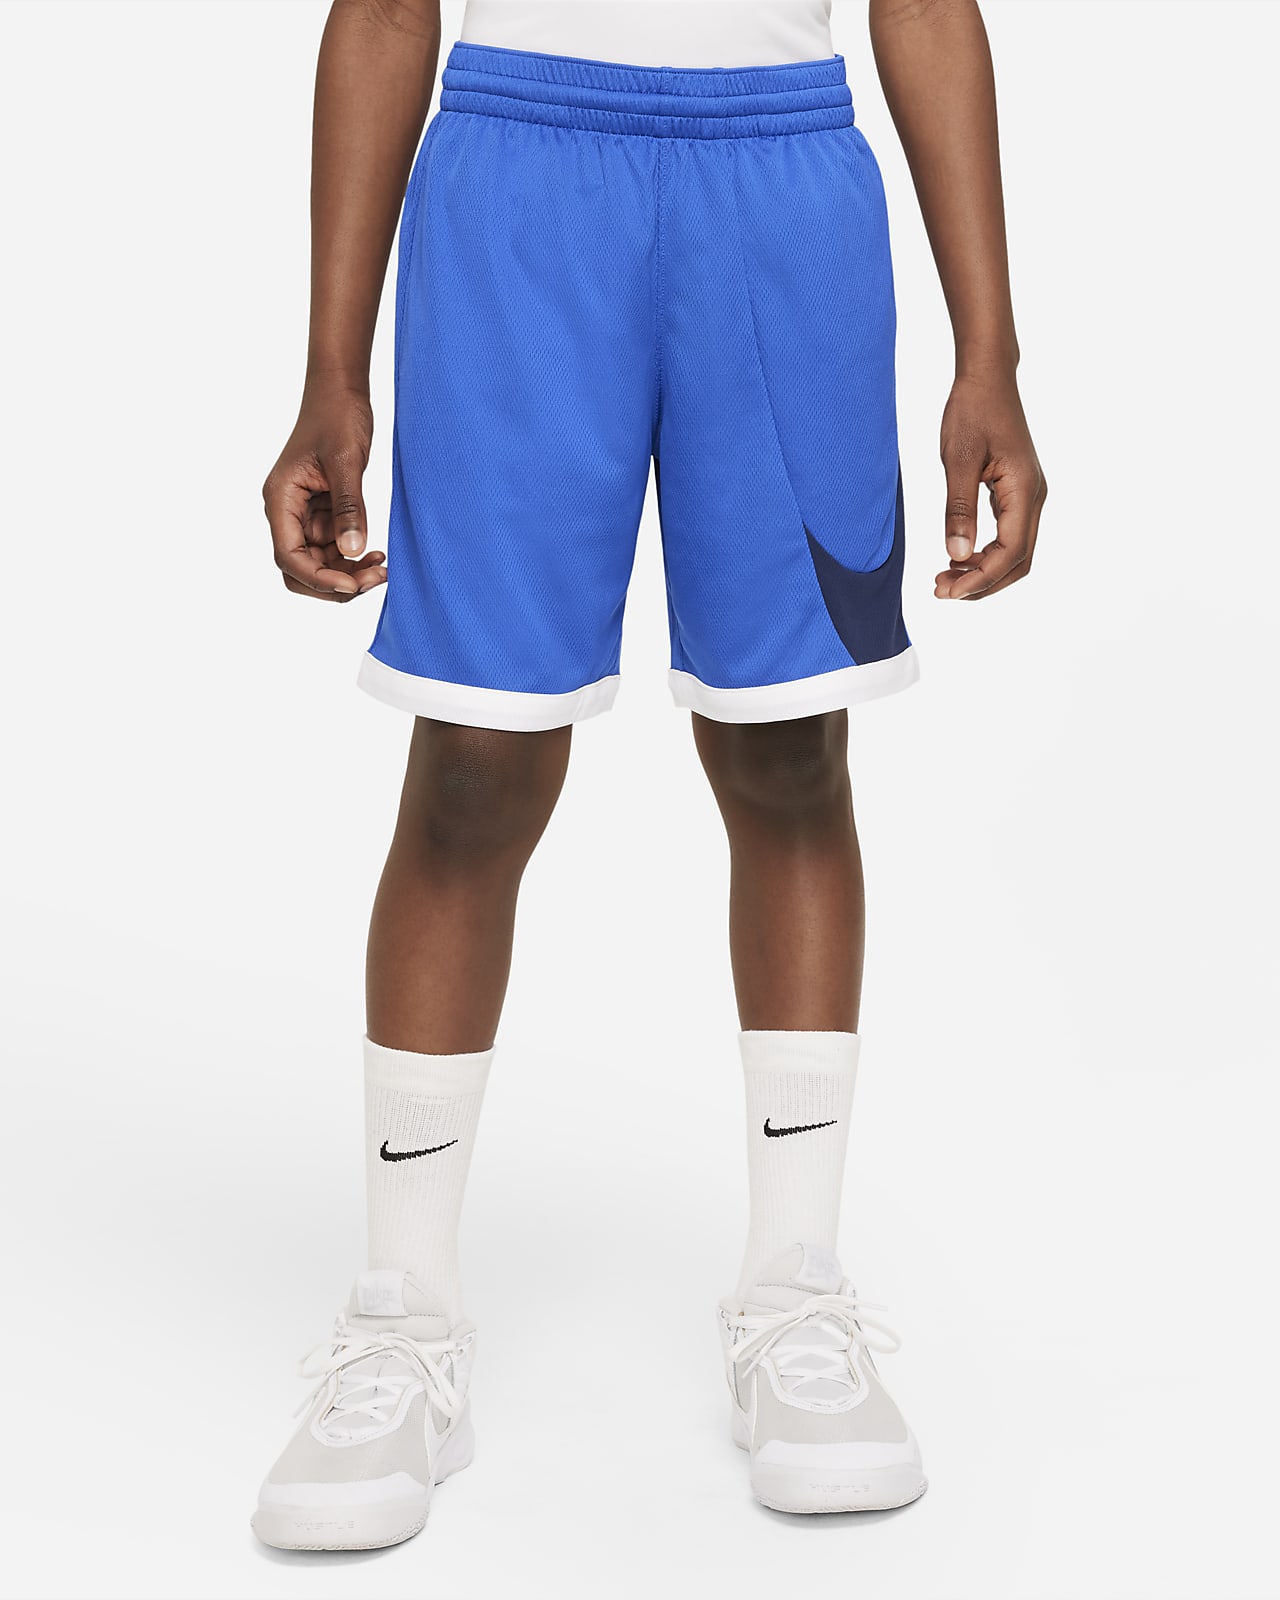 Nike Dri-FIT Basketballshorts für ältere Kinder (Jungen)